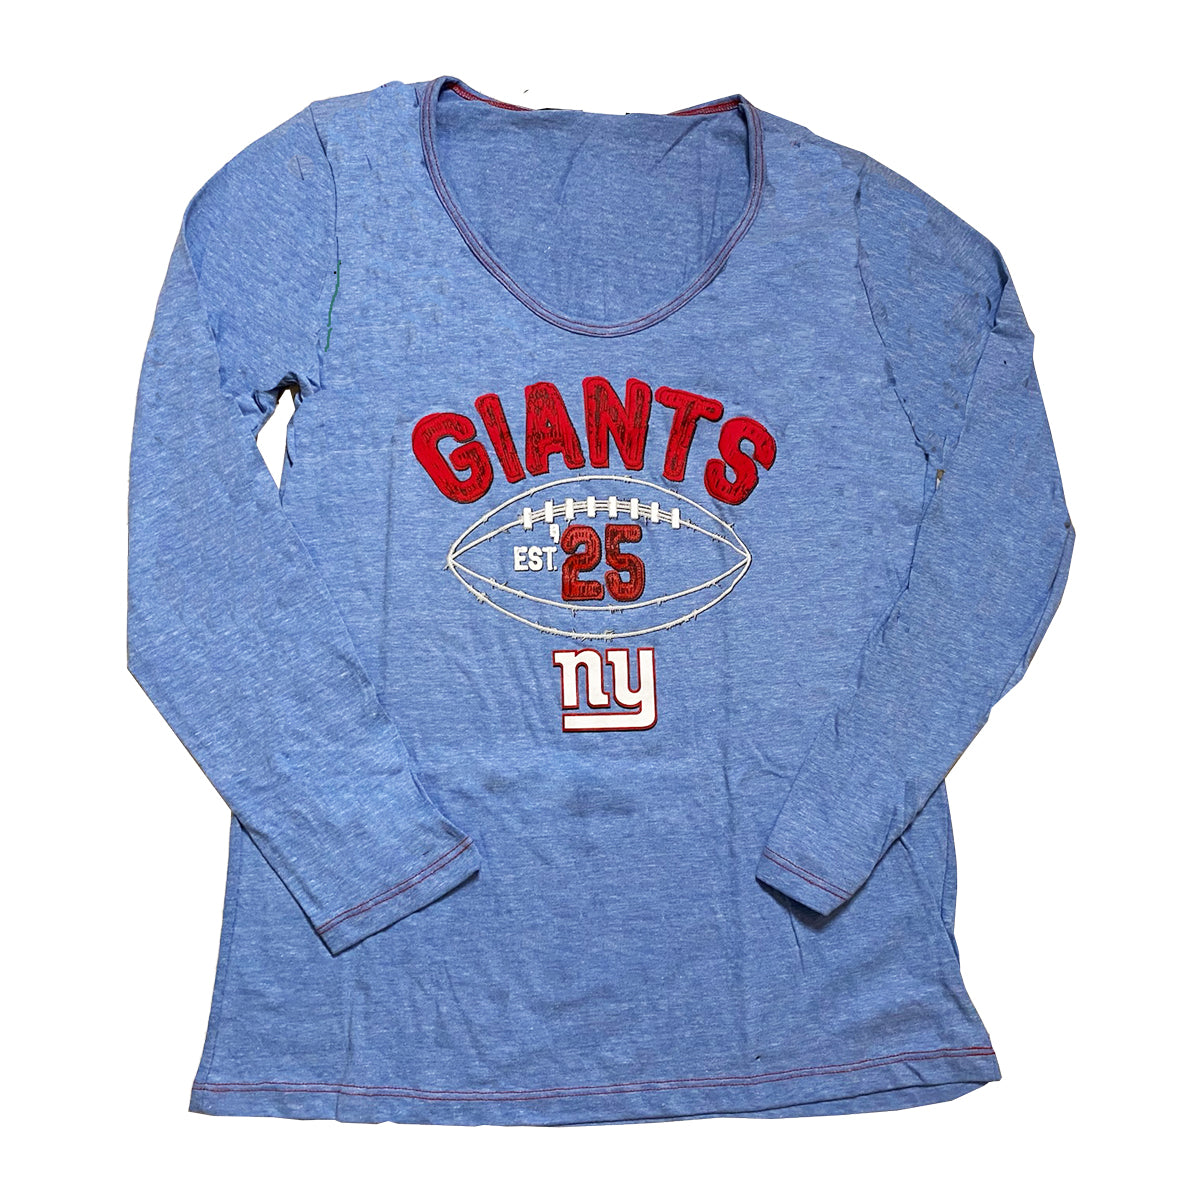 New York Giants Womens in New York Giants Team Shop 